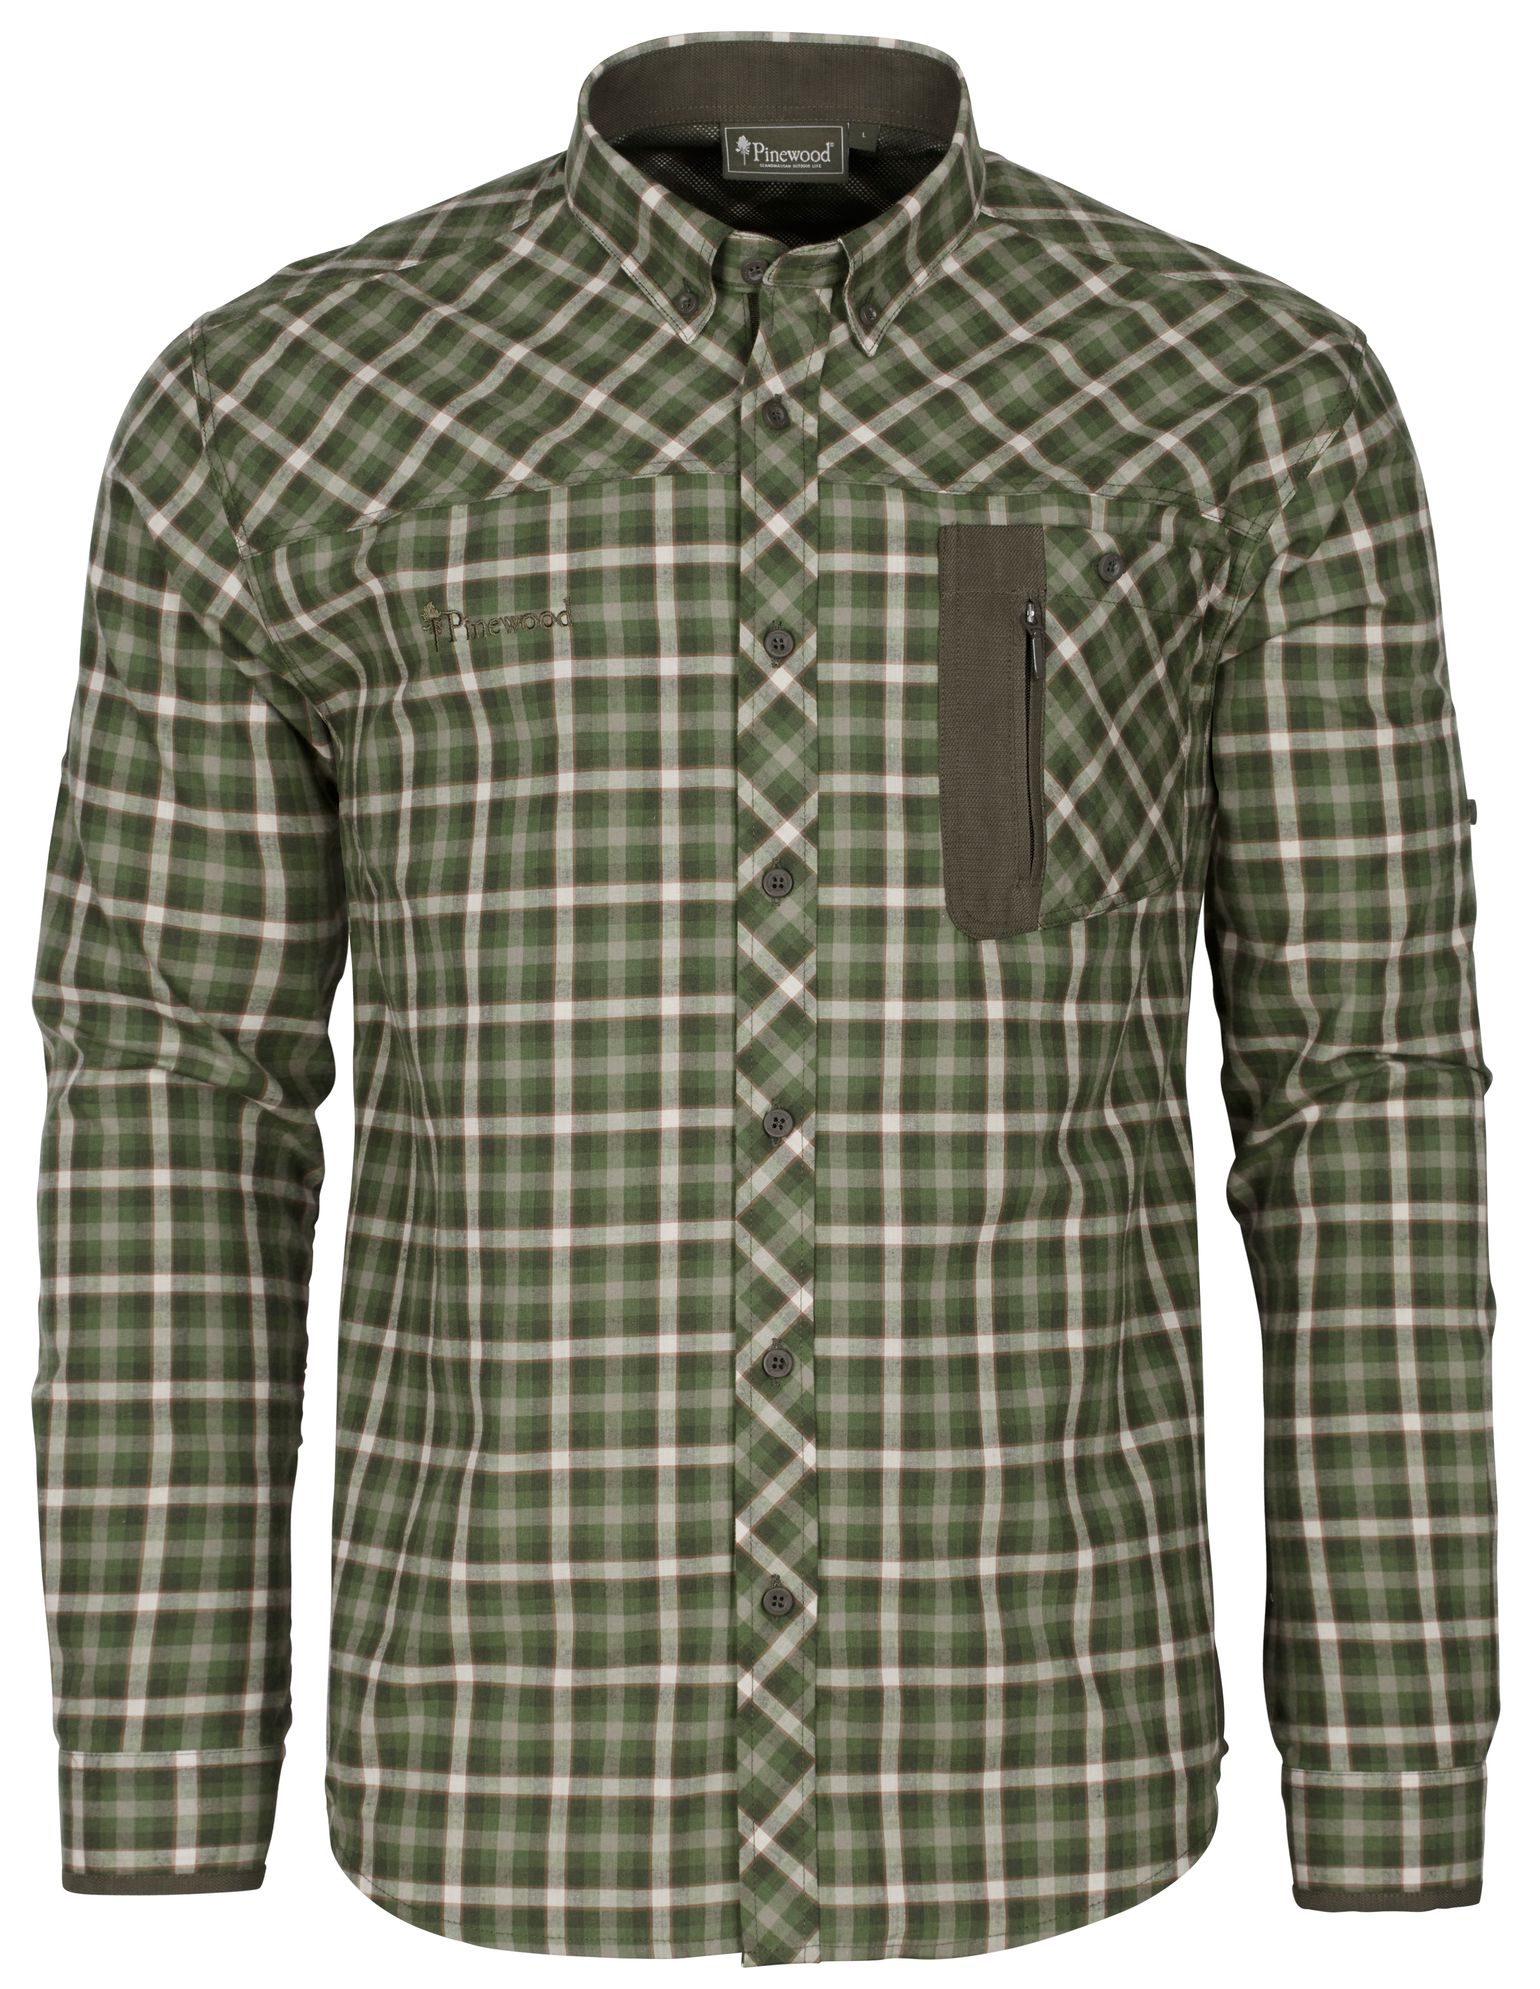 Pinewood Men's Wolf Shirt Pinegreen/Offwhite